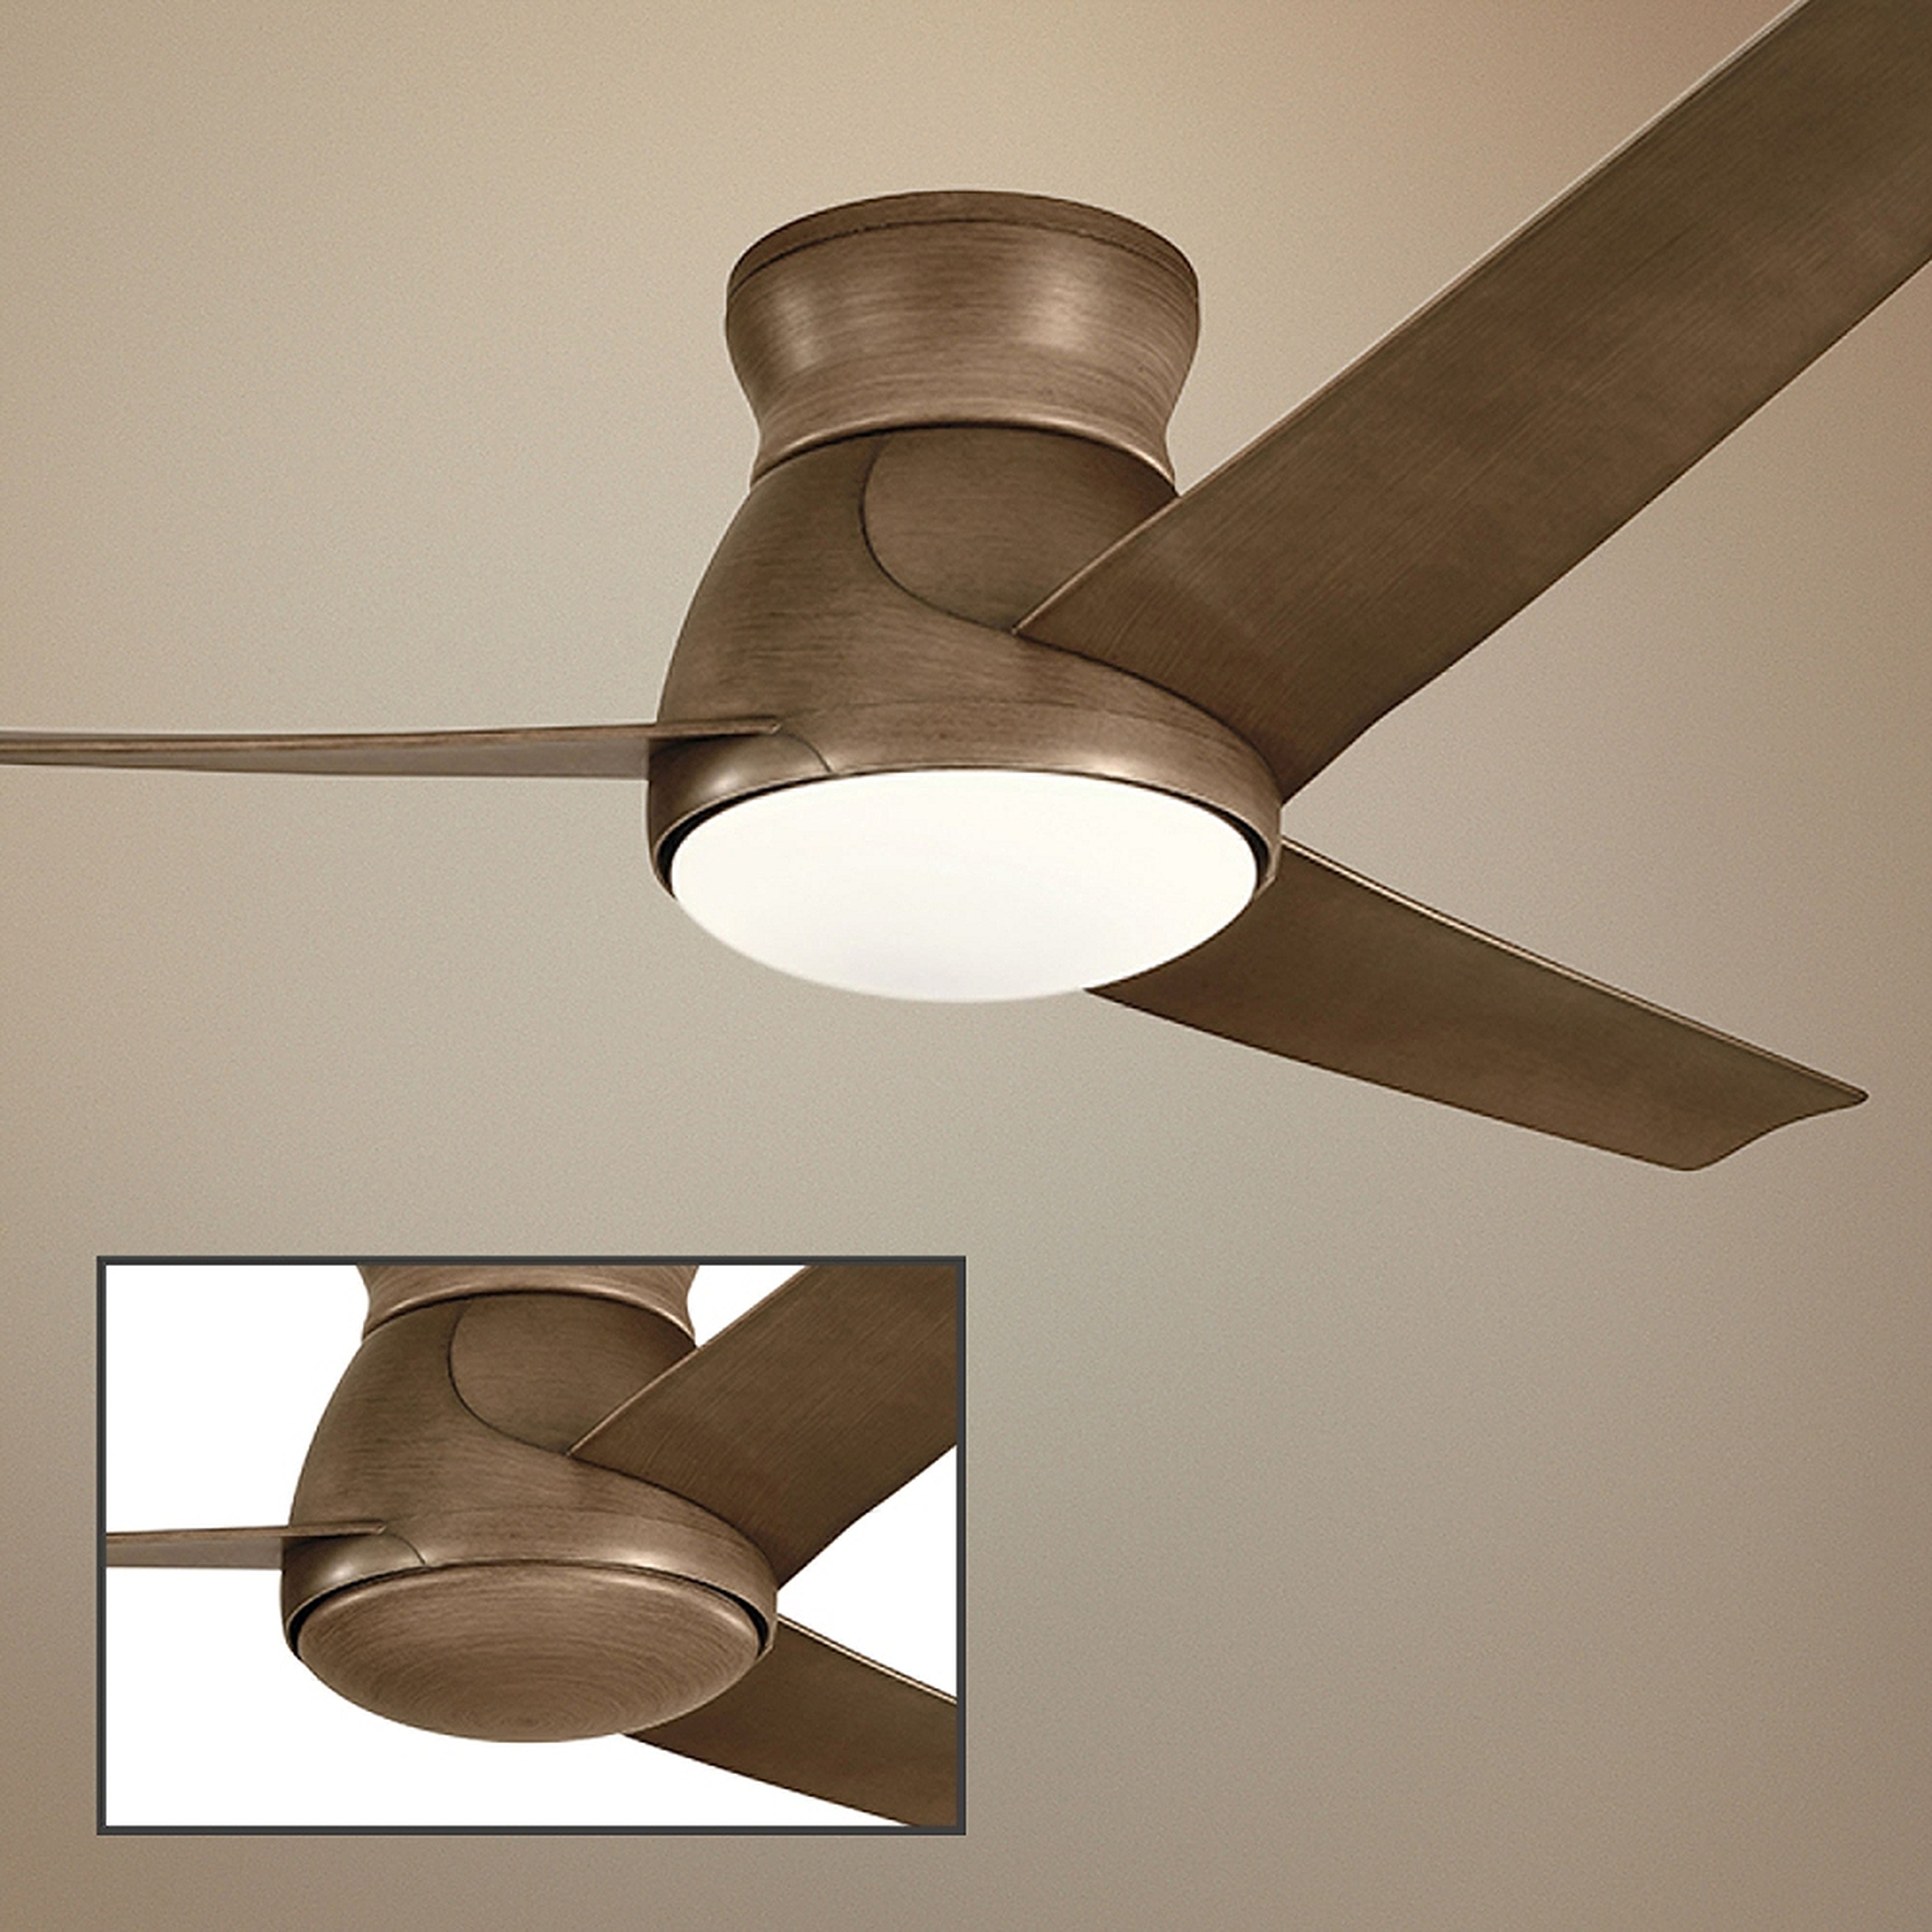 60" Kichler Eris Walnut LED Hugger Ceiling Fan - Style # 63P45 - Lamps Plus